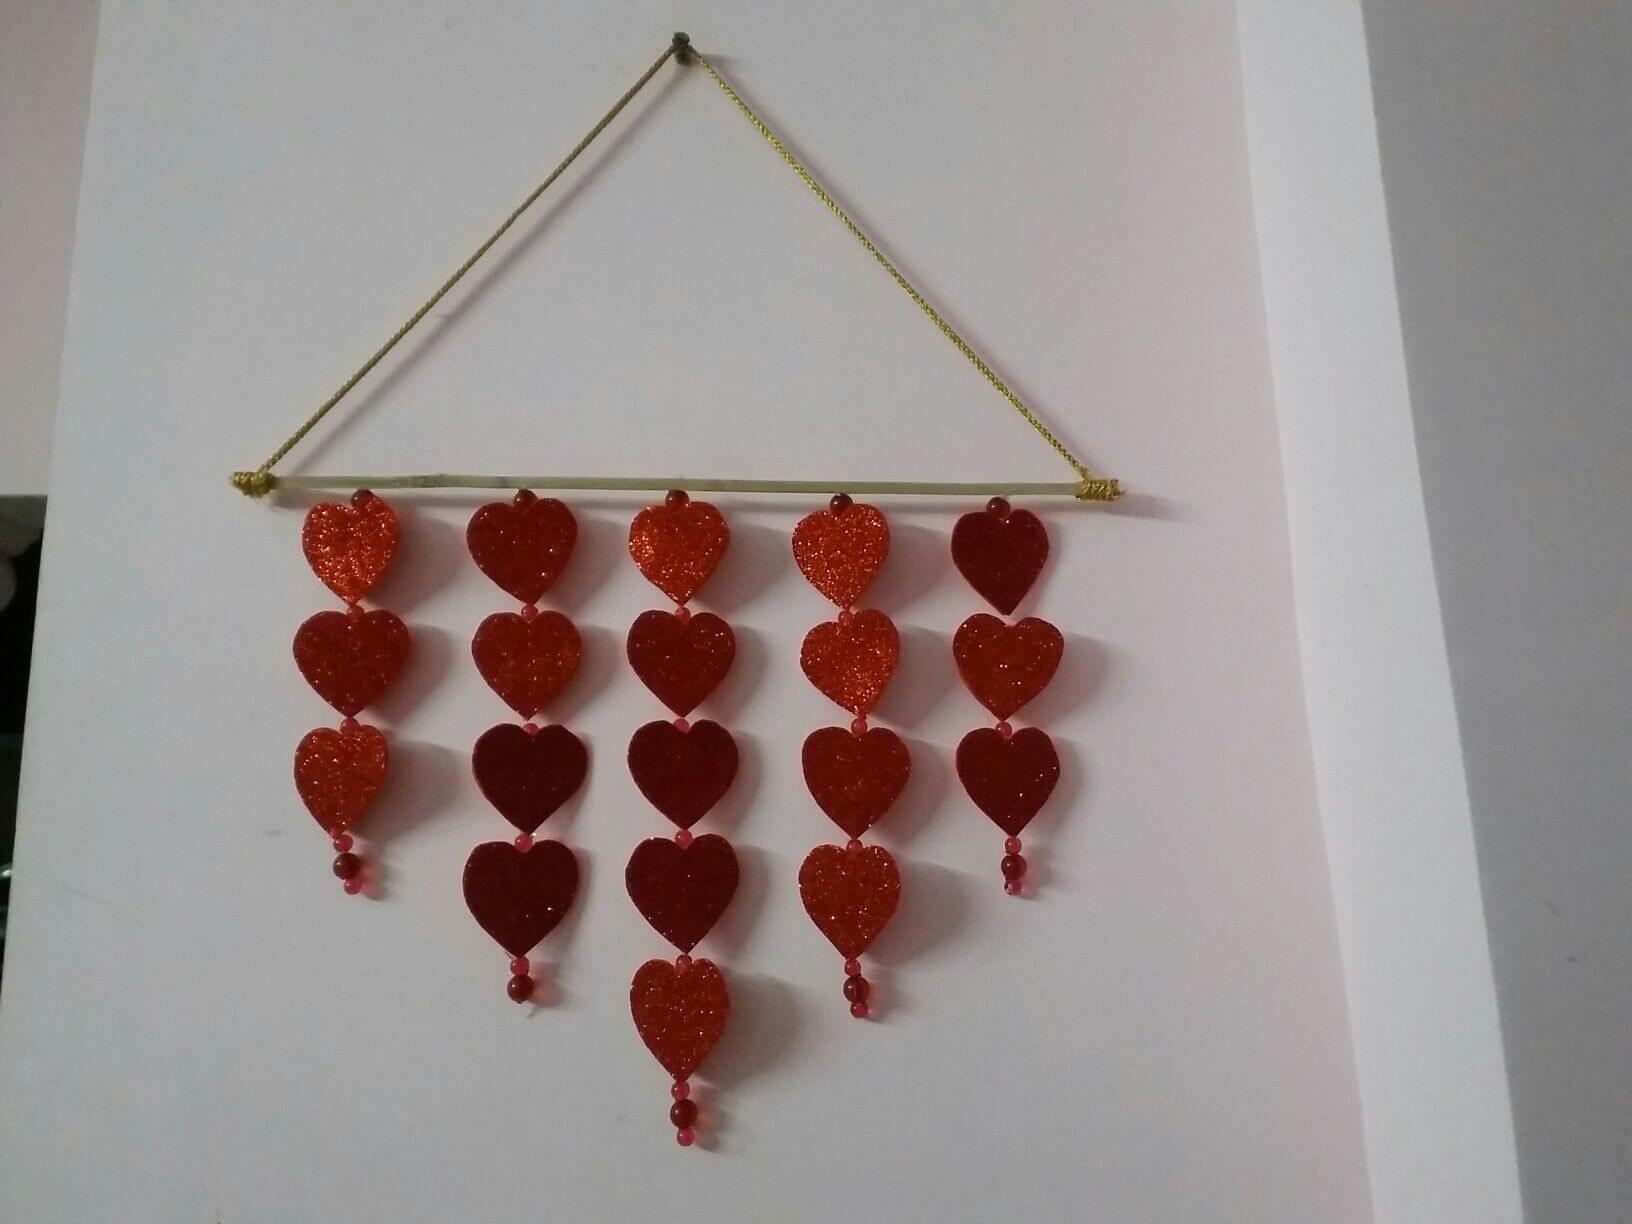 Awesome Heart Craft For Wall Decor Using Glitter FoamGlitter Foam Sheet Crafts Ideas